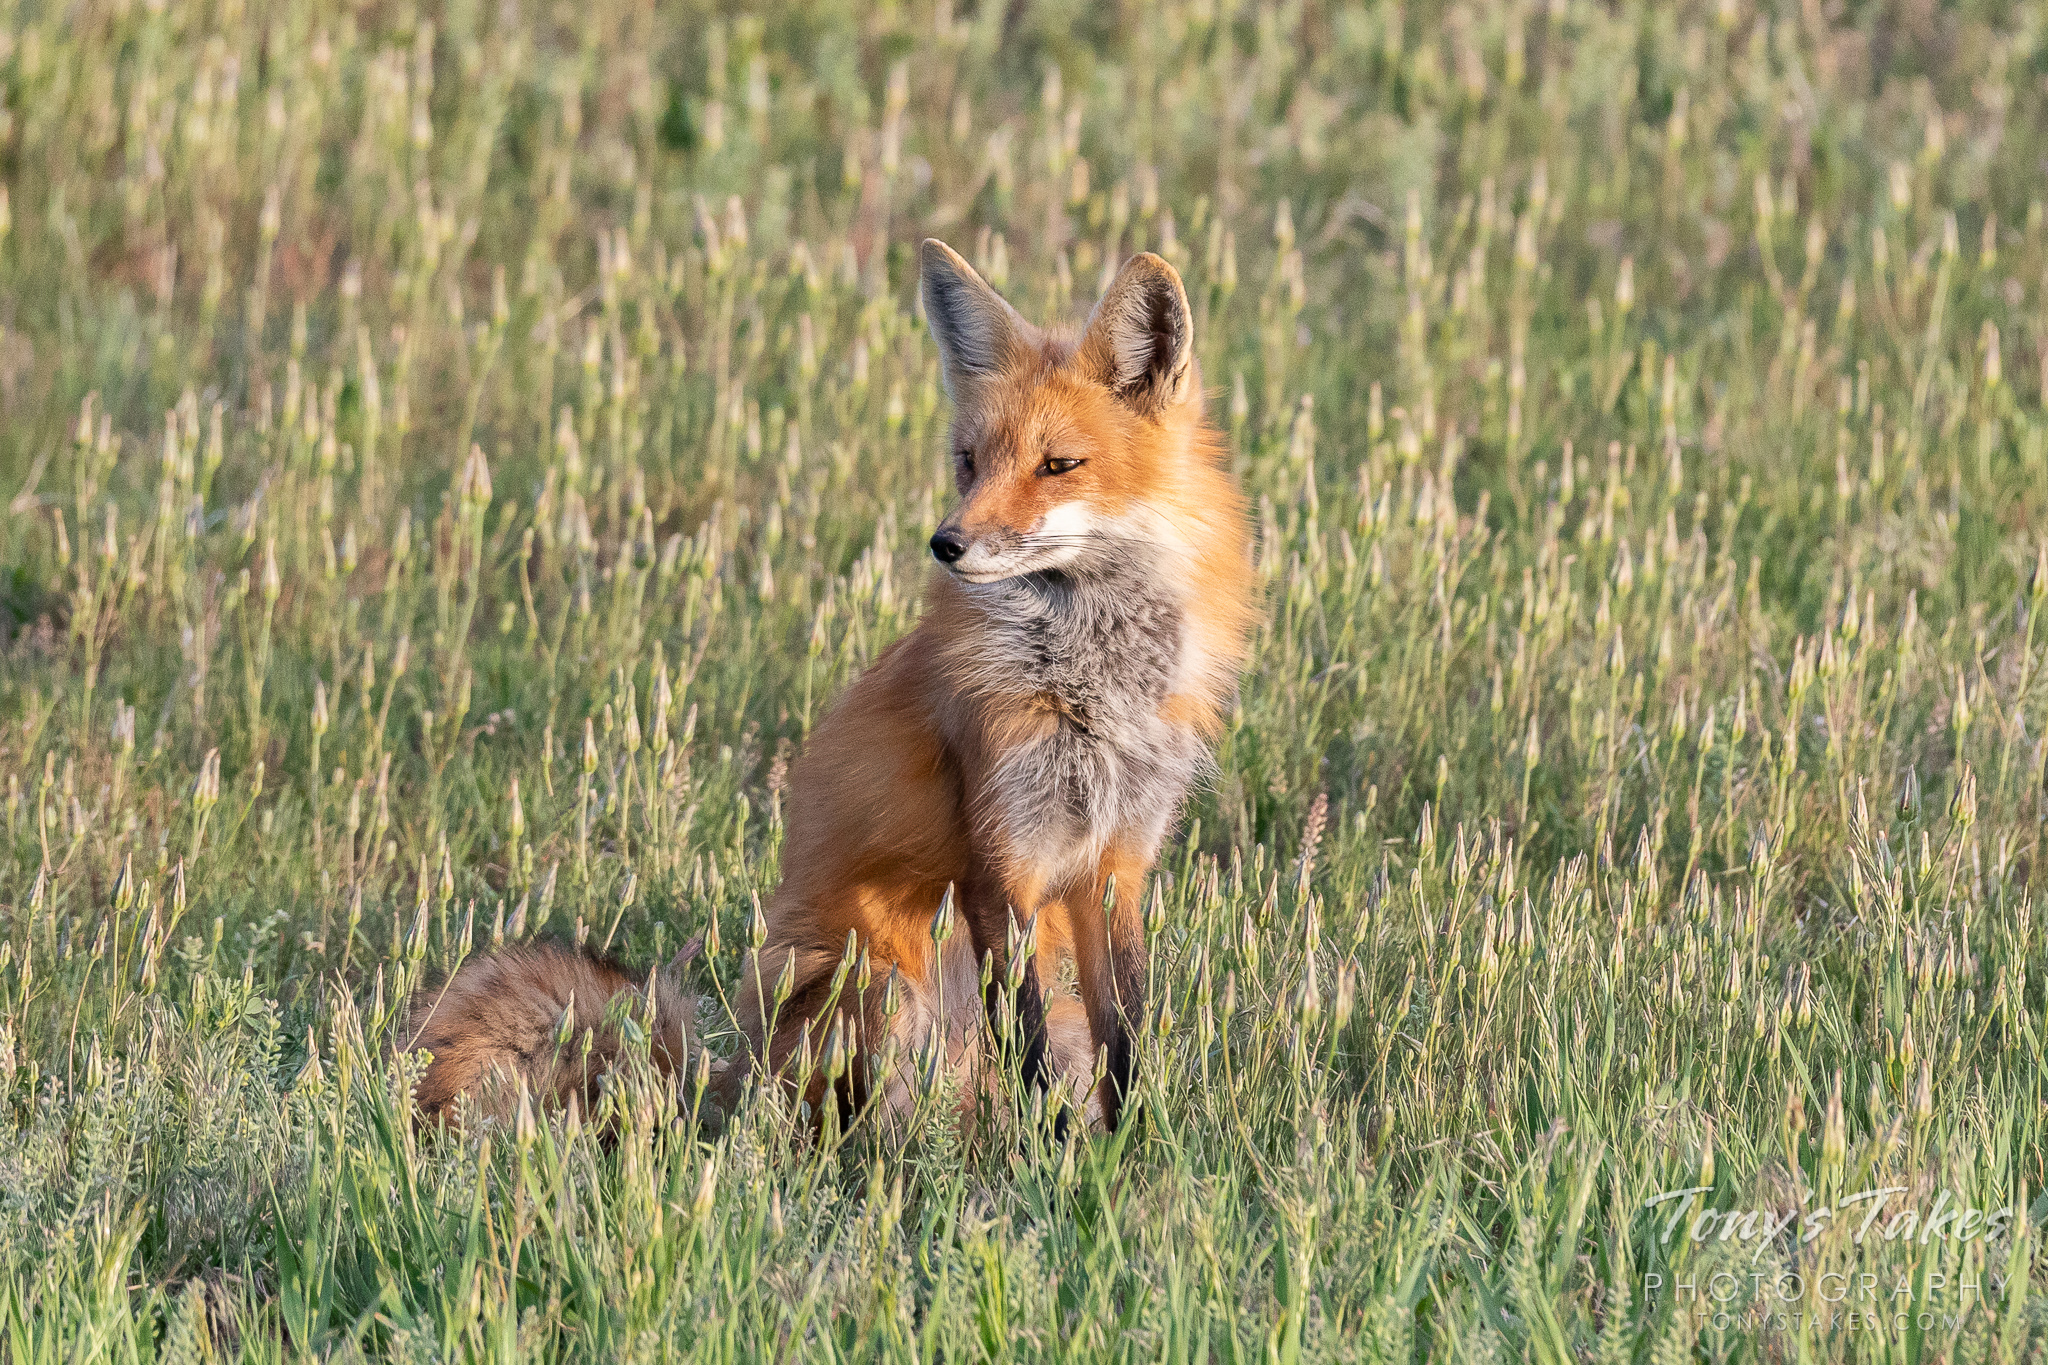 Red fox enjoying a quiet evening in the sun